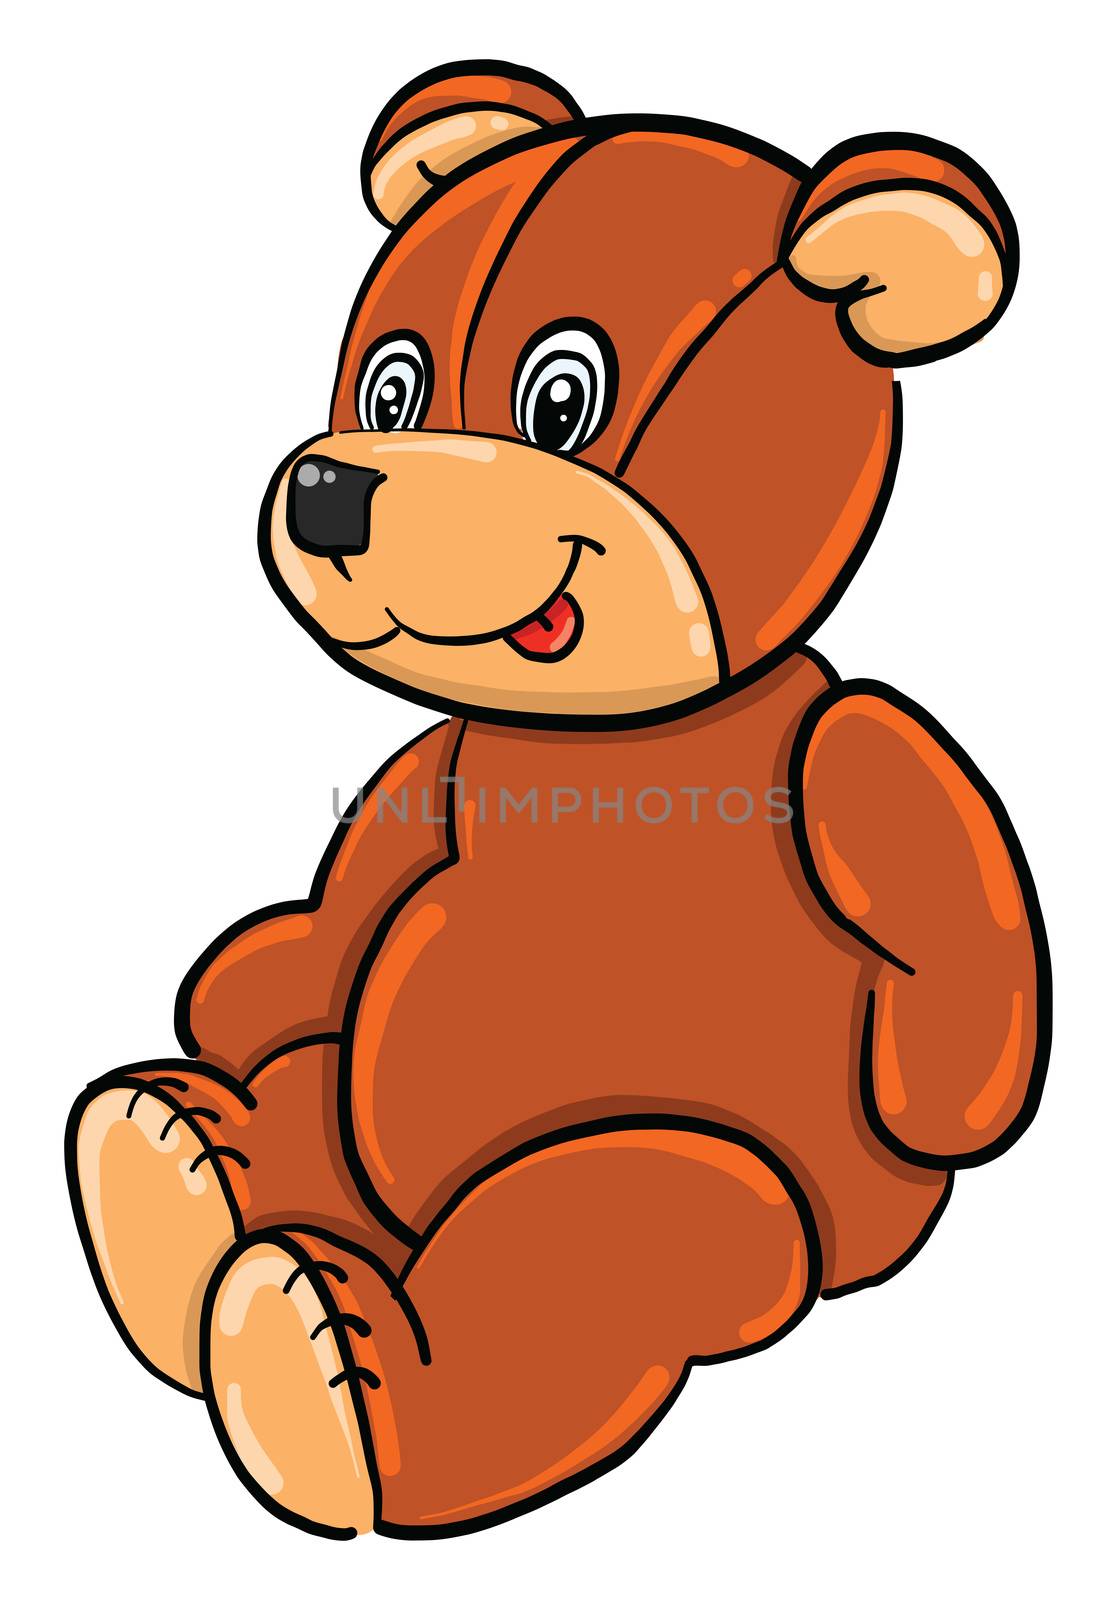 Teddy bear , illustration, vector on white background